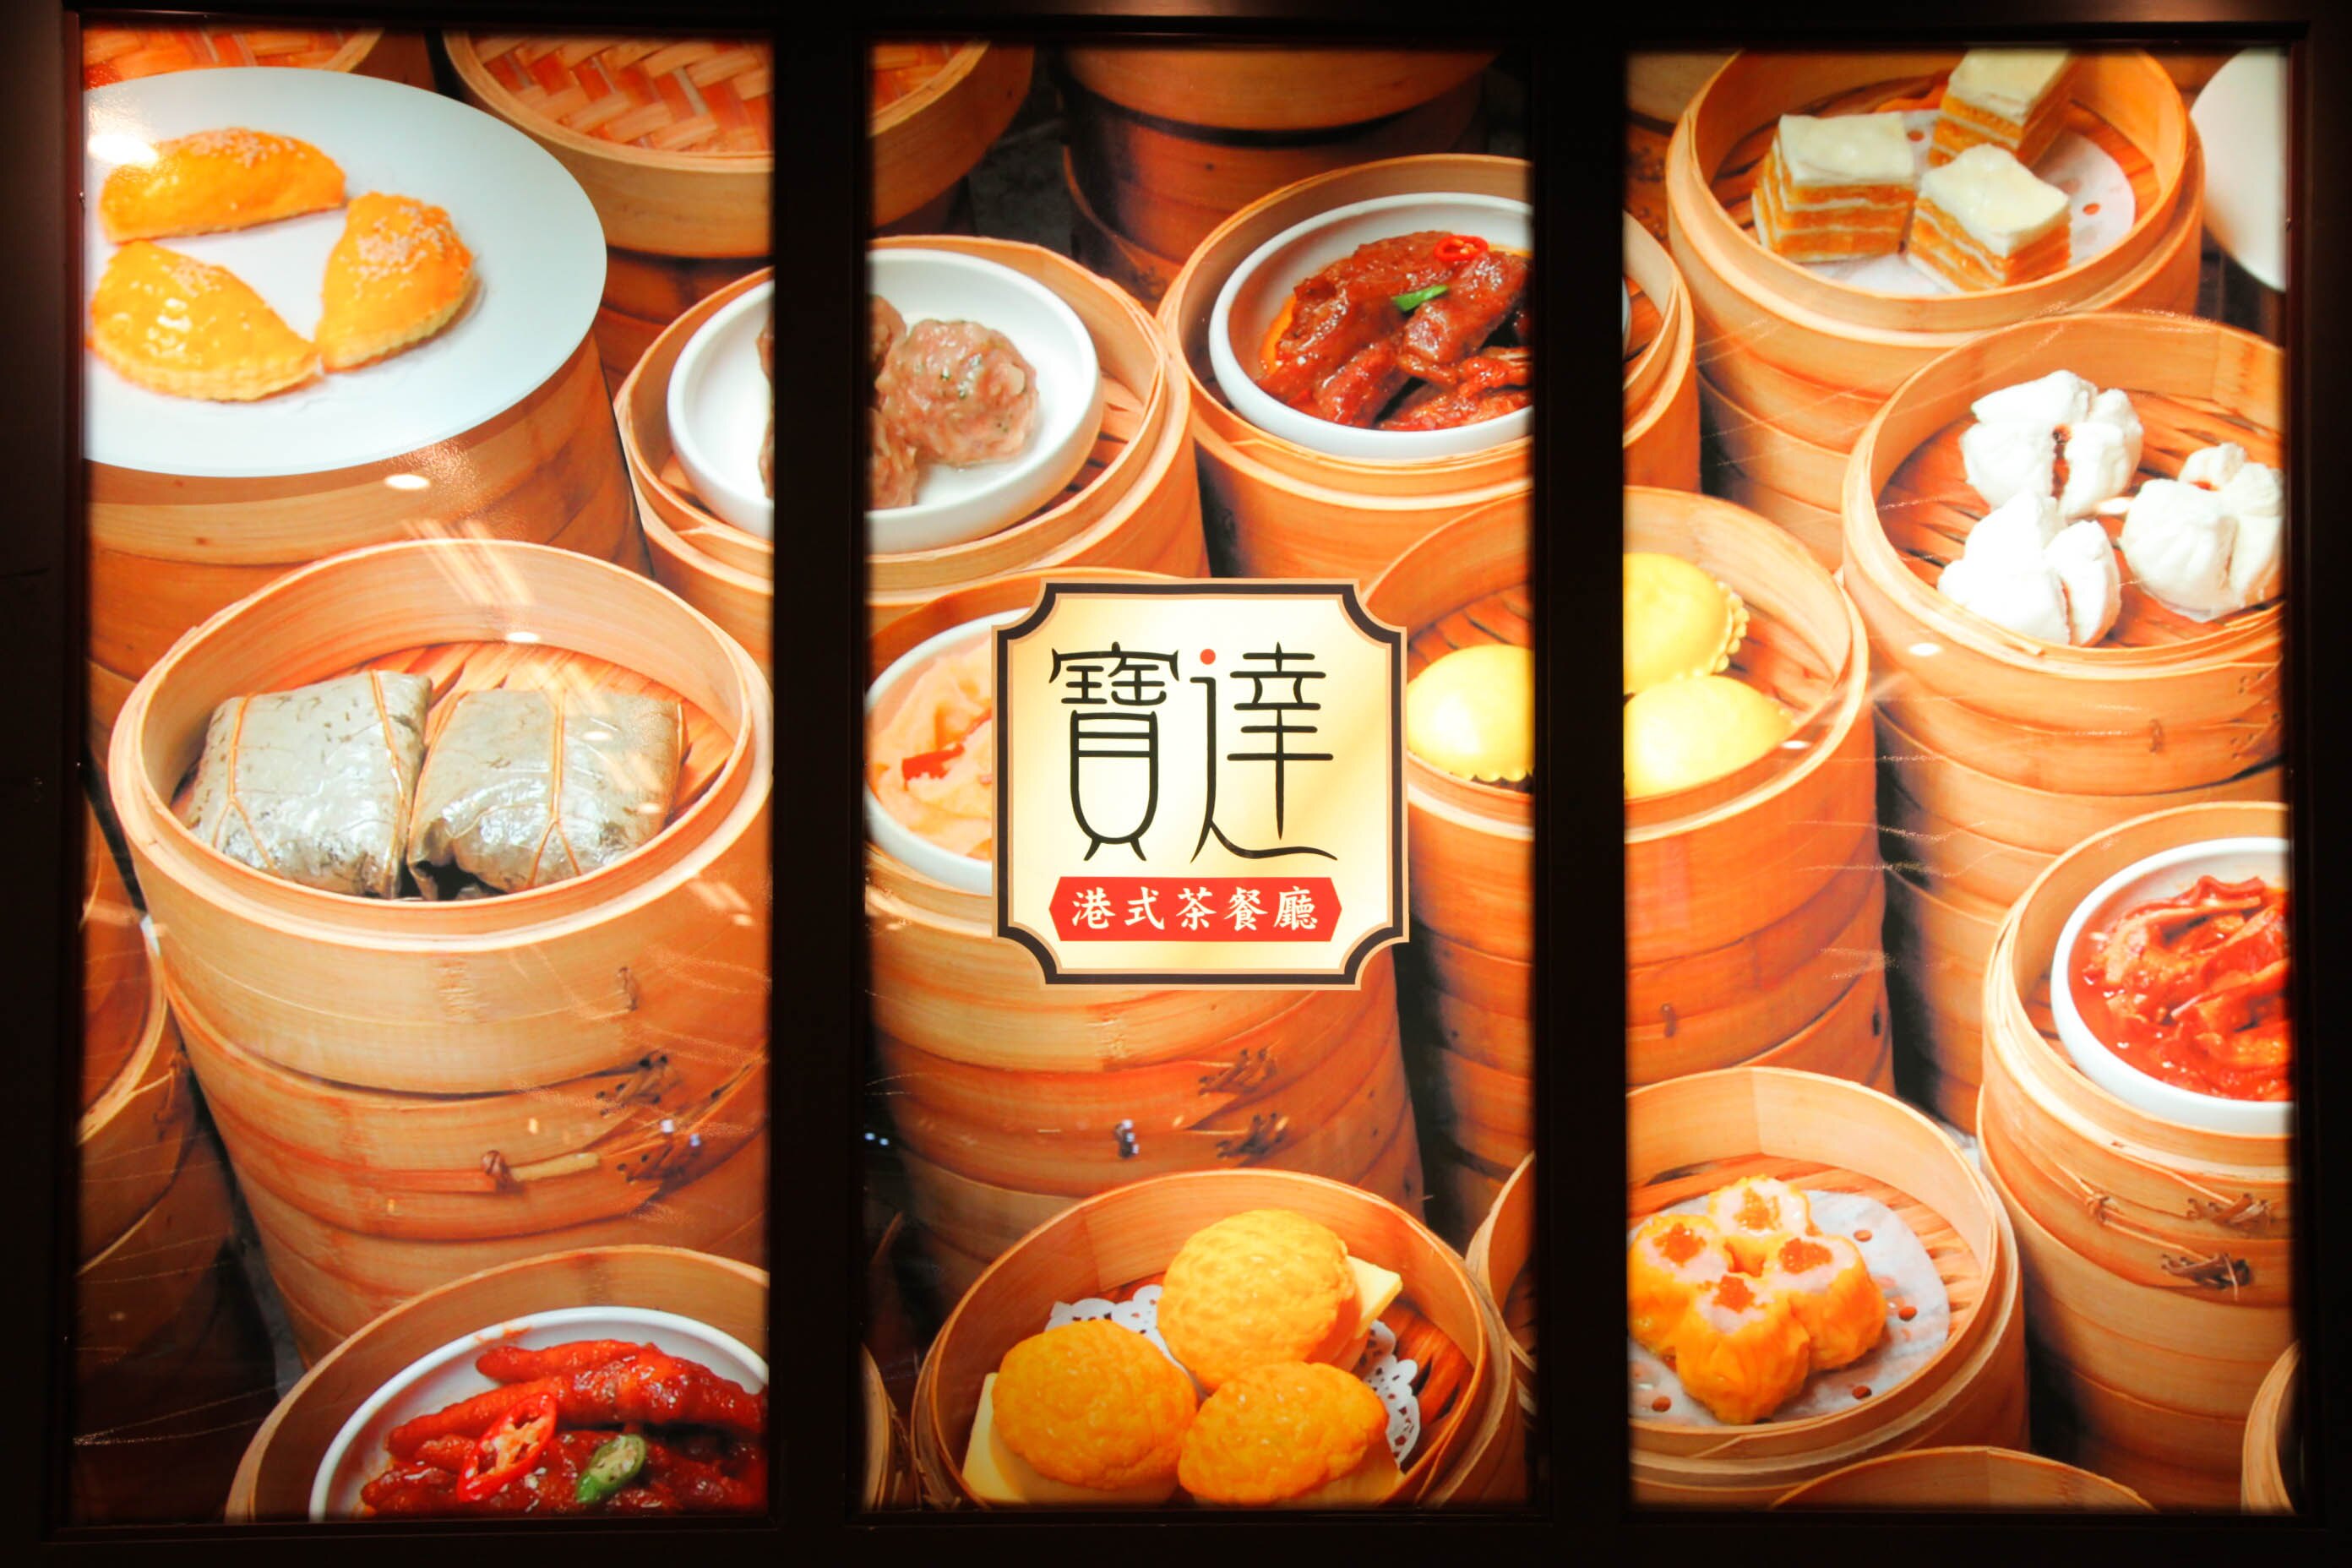 Restoran Bao Da Cantonese Dim Sum menciptakan lingkungan makan yang nyaman, ramah dan santai. Sumber: 張卓成